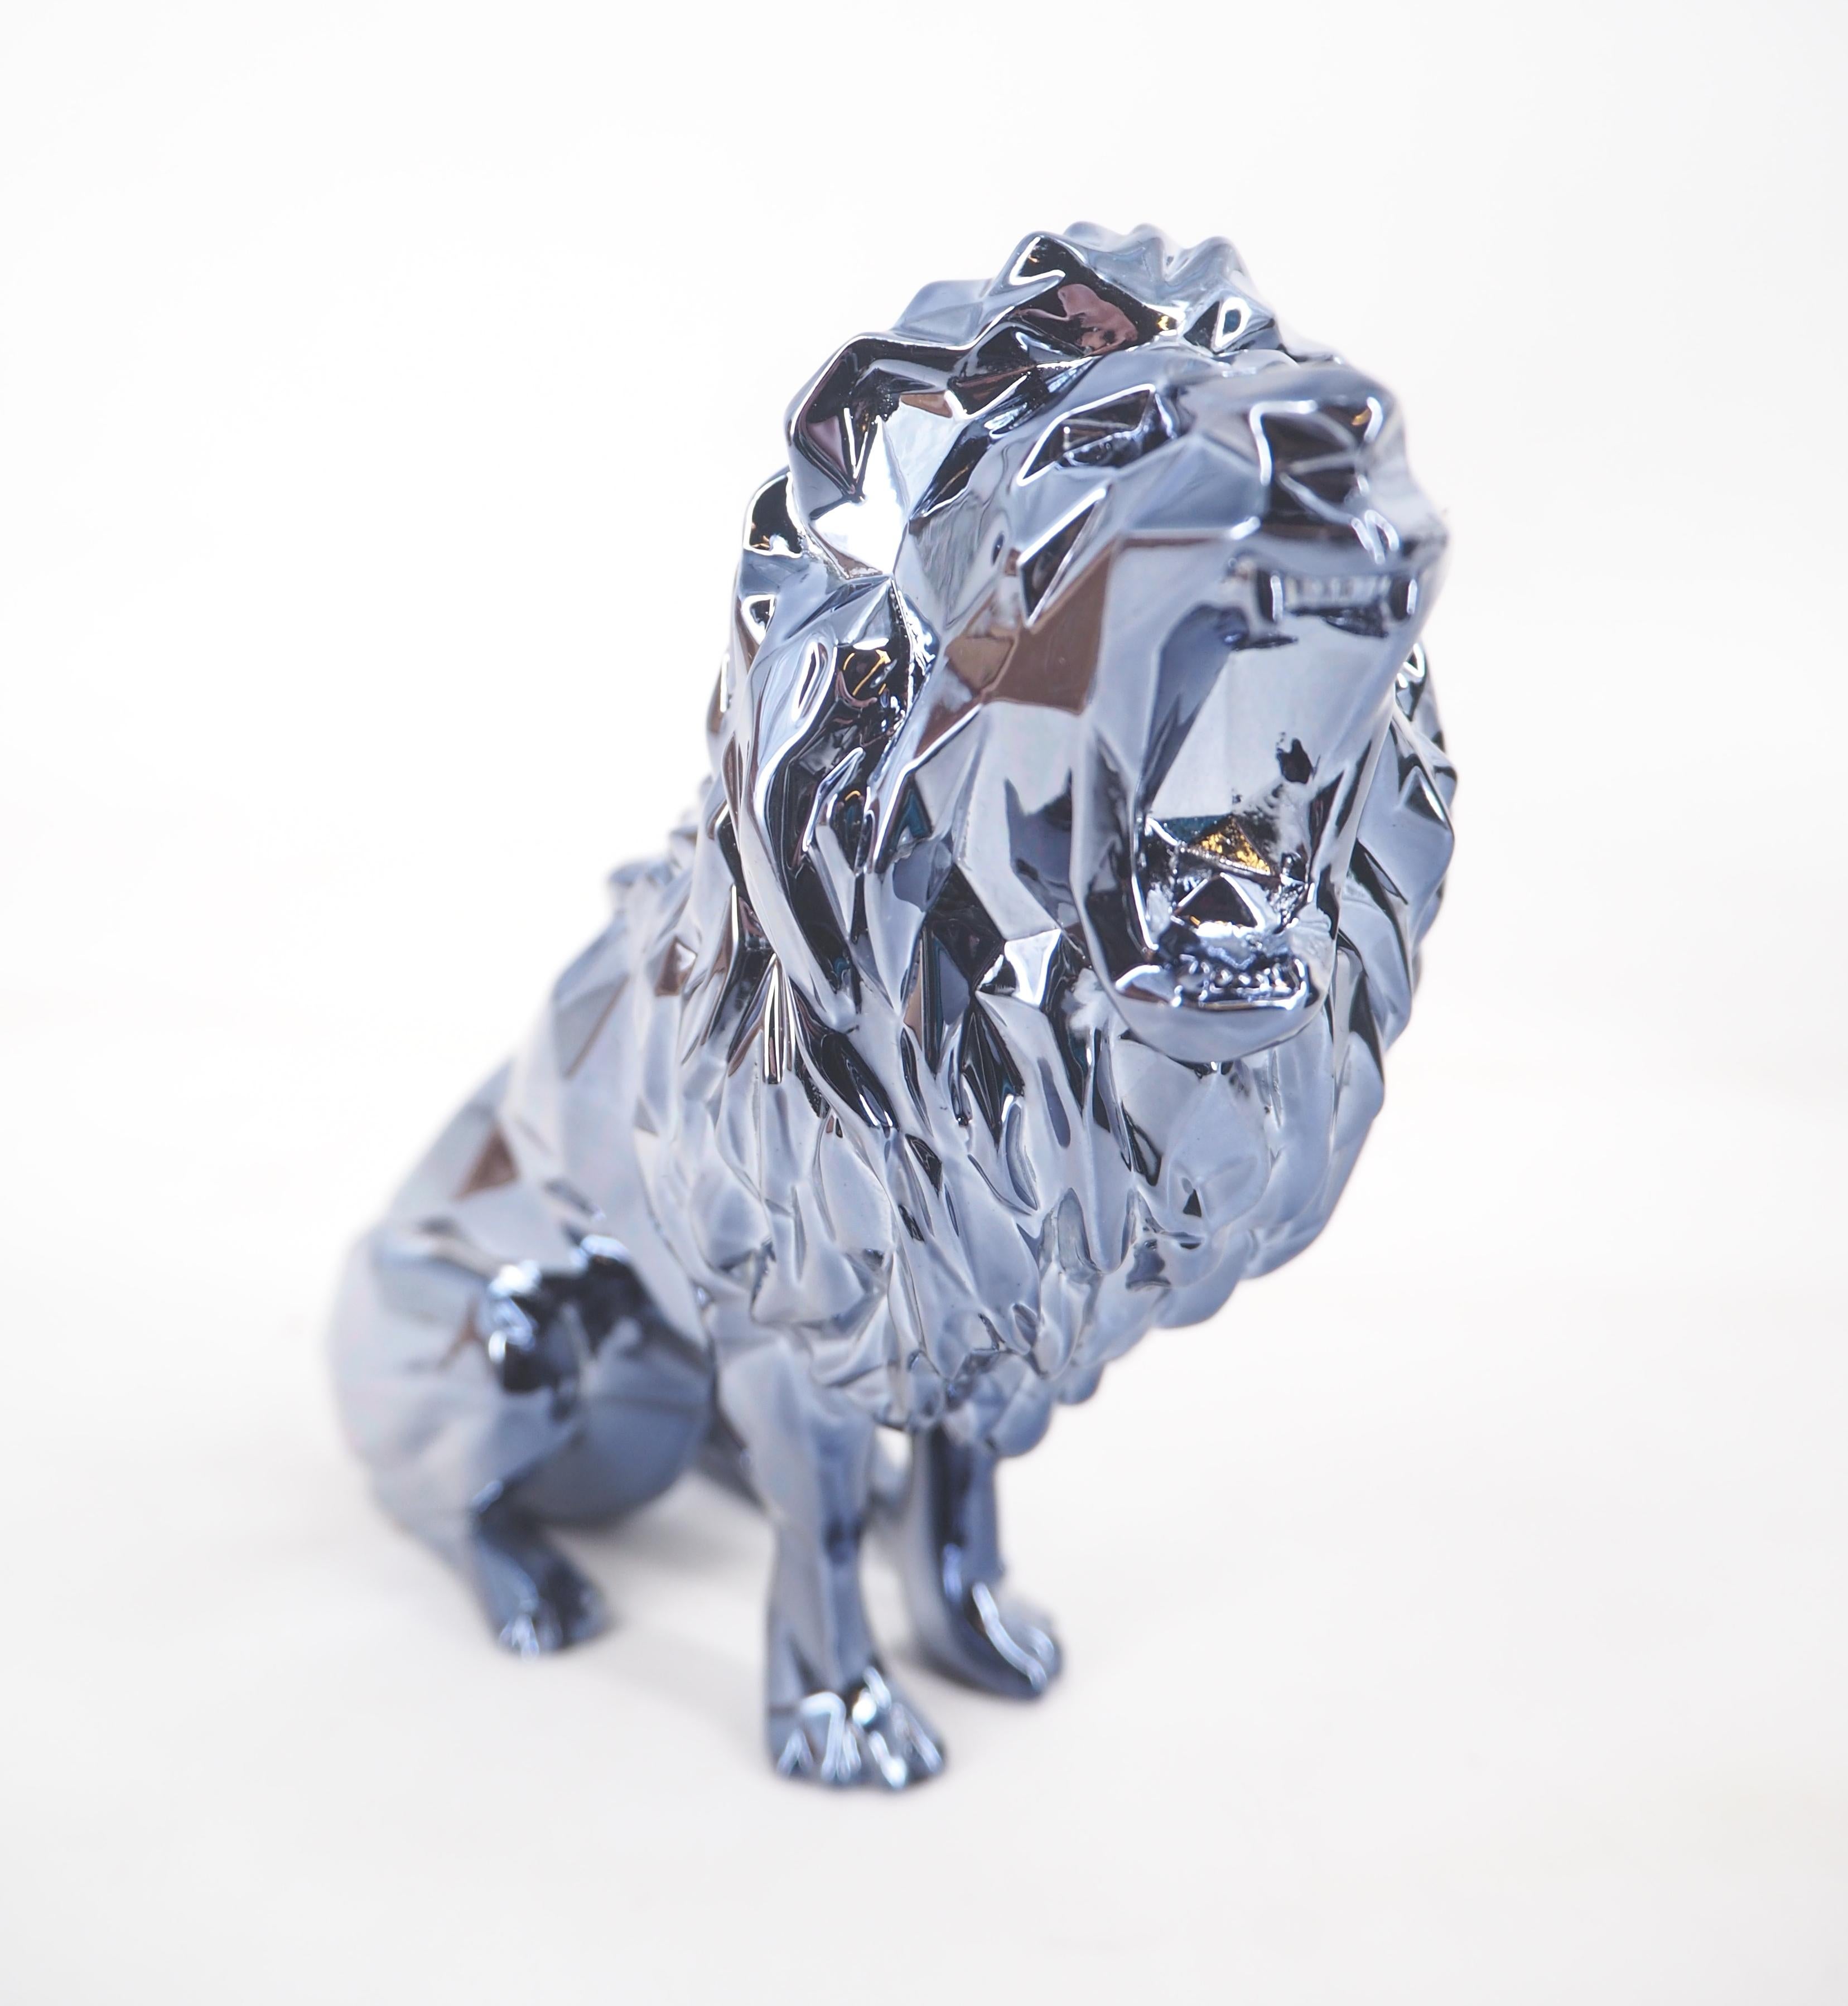 Roaring Lion Spirit (Petrol Edition) – Skulptur in Originalverpackung mit Künstlermantel